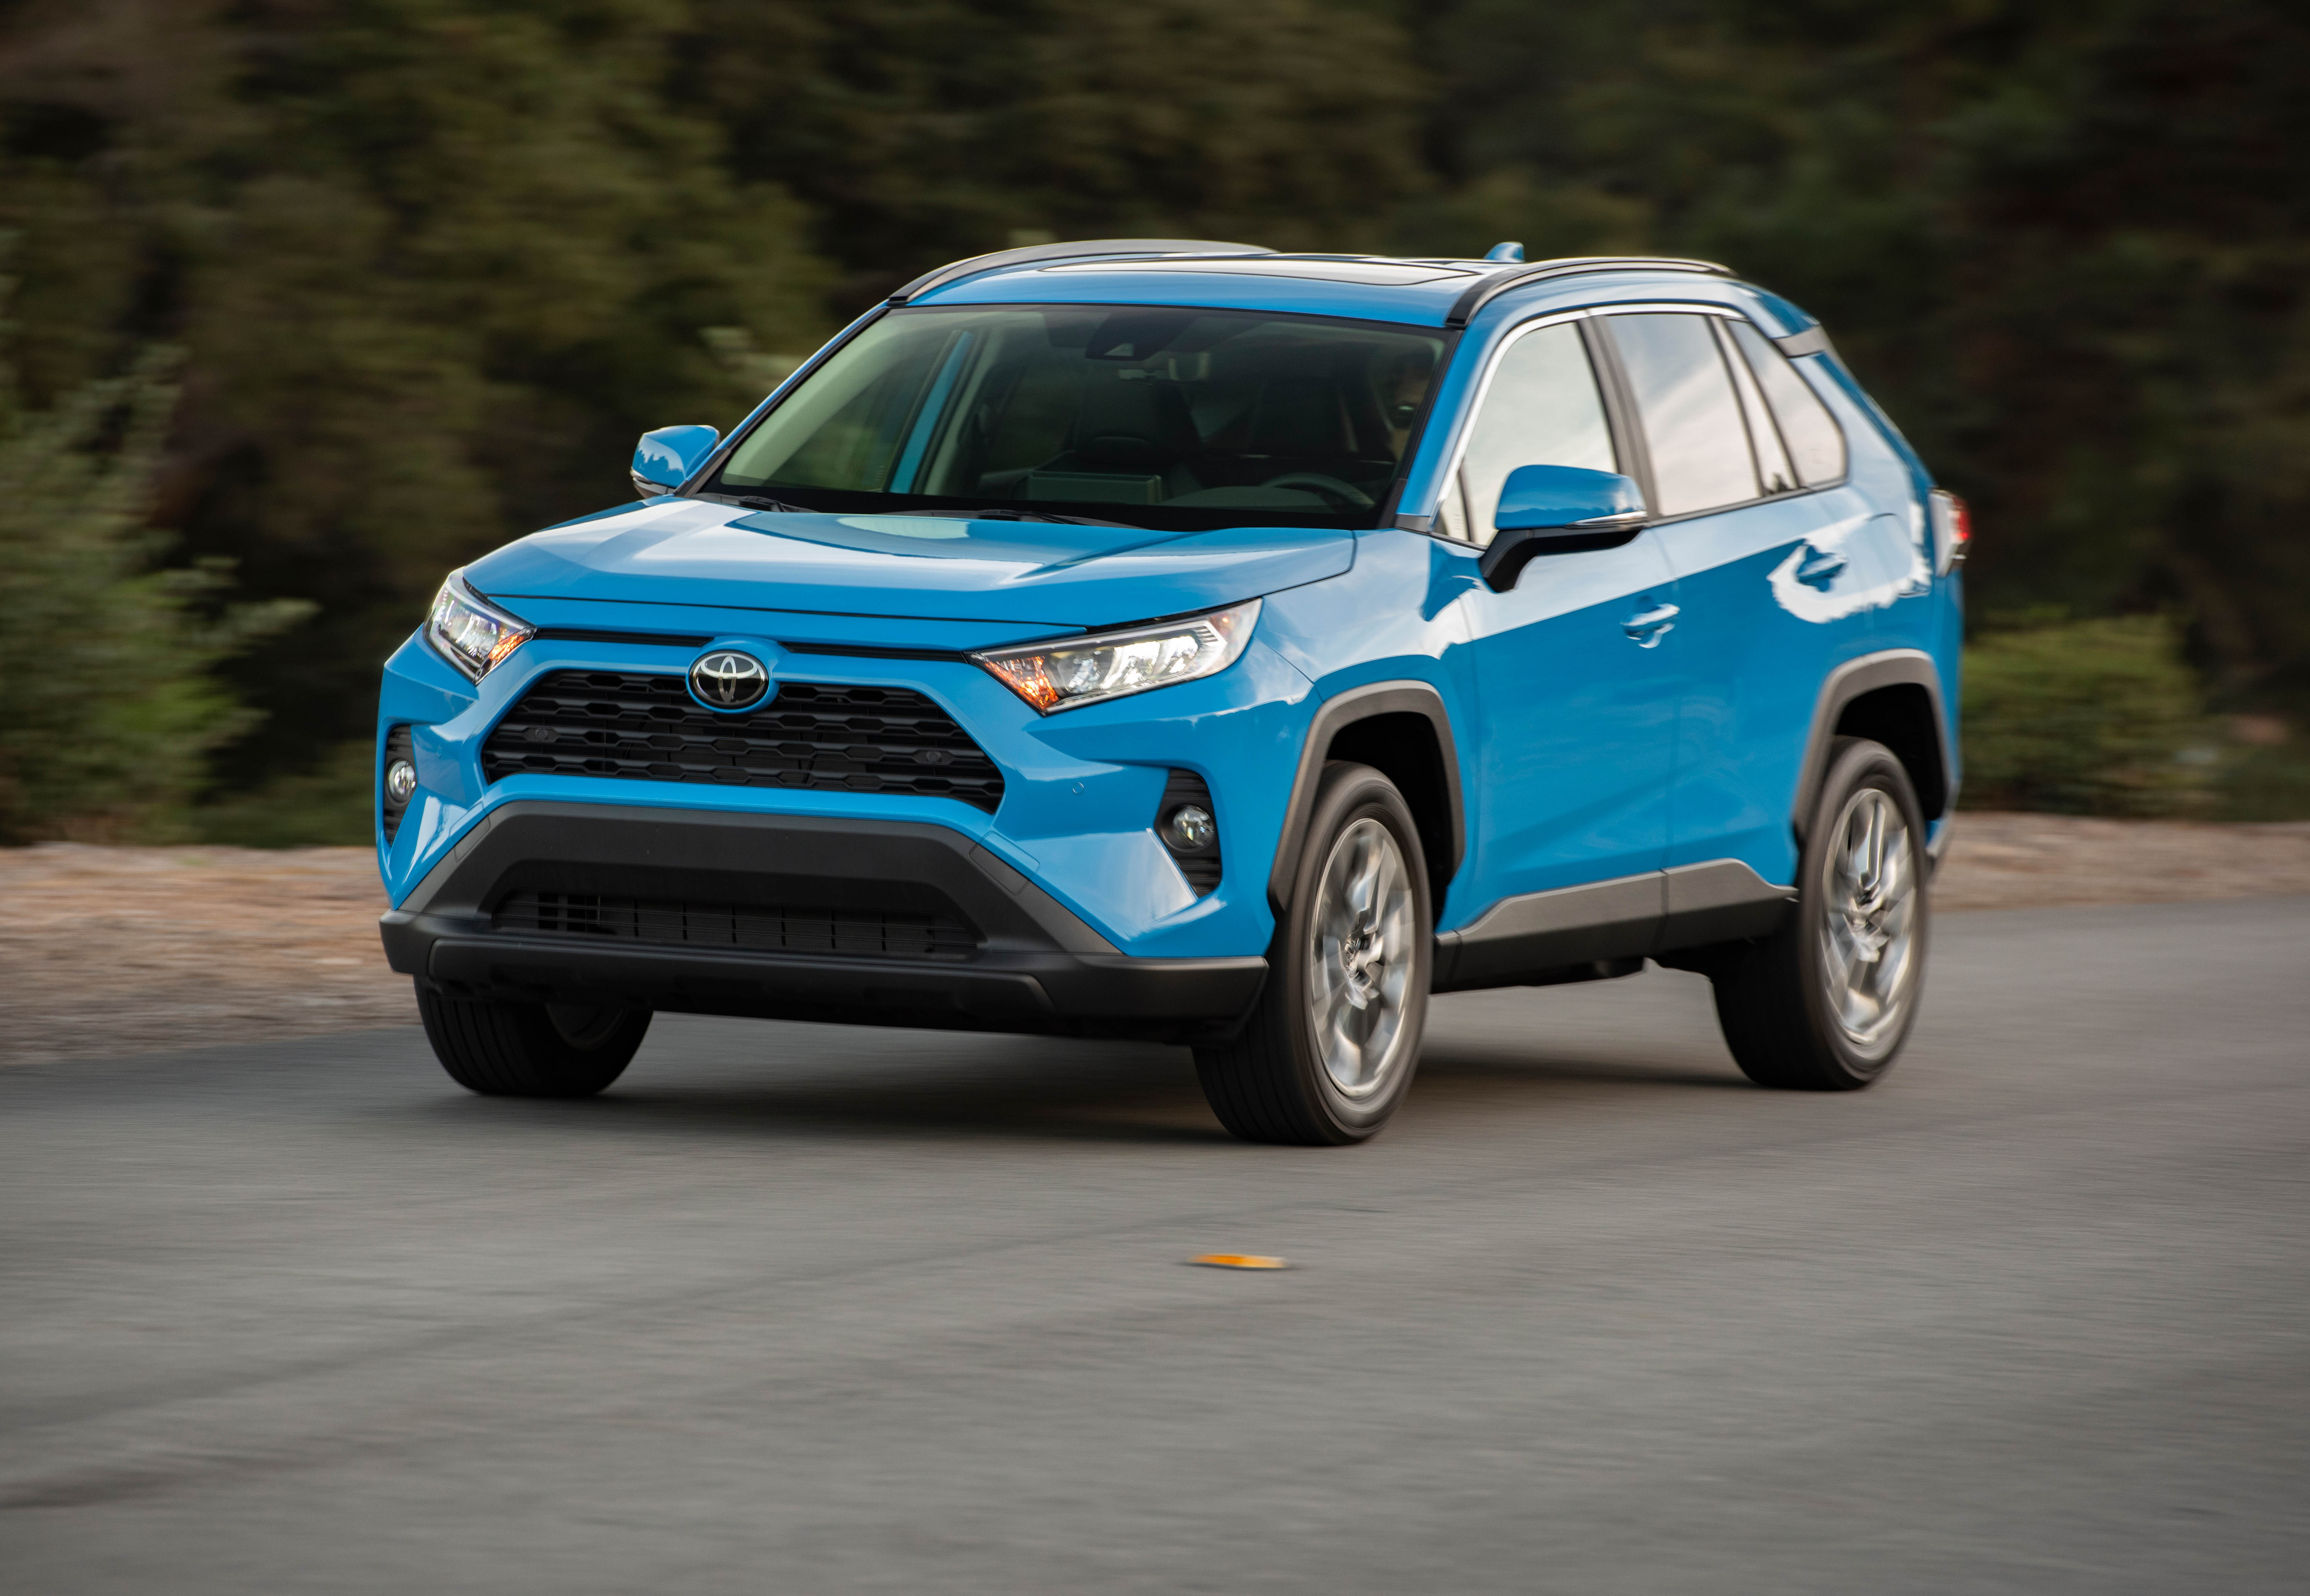 2019 Toyota RAV4 Product Information - Toyota USA Newsroom